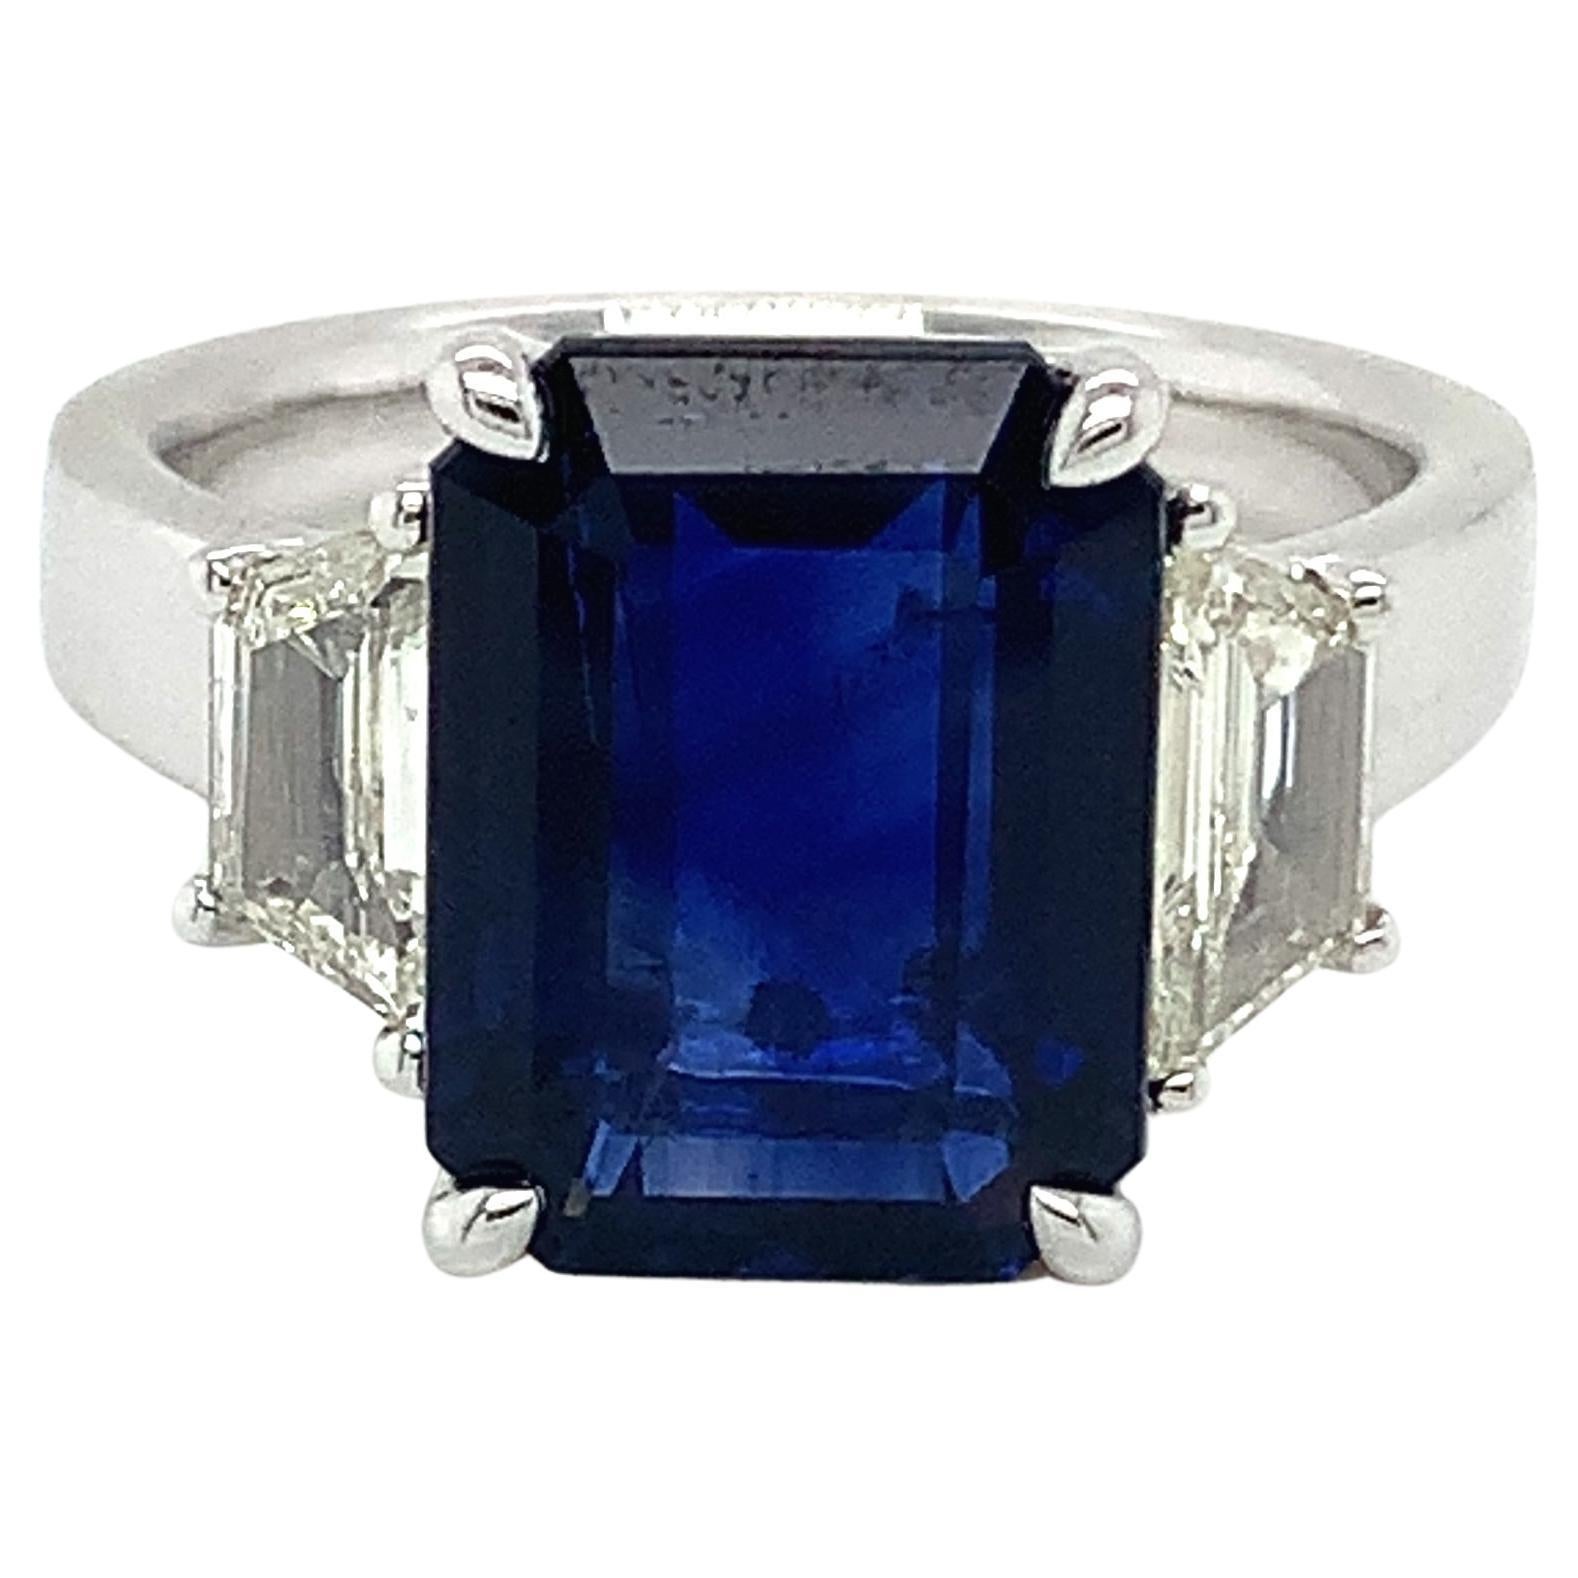 5.79 Carat Ceylon Sapphire & Diamond Ring in Platinum